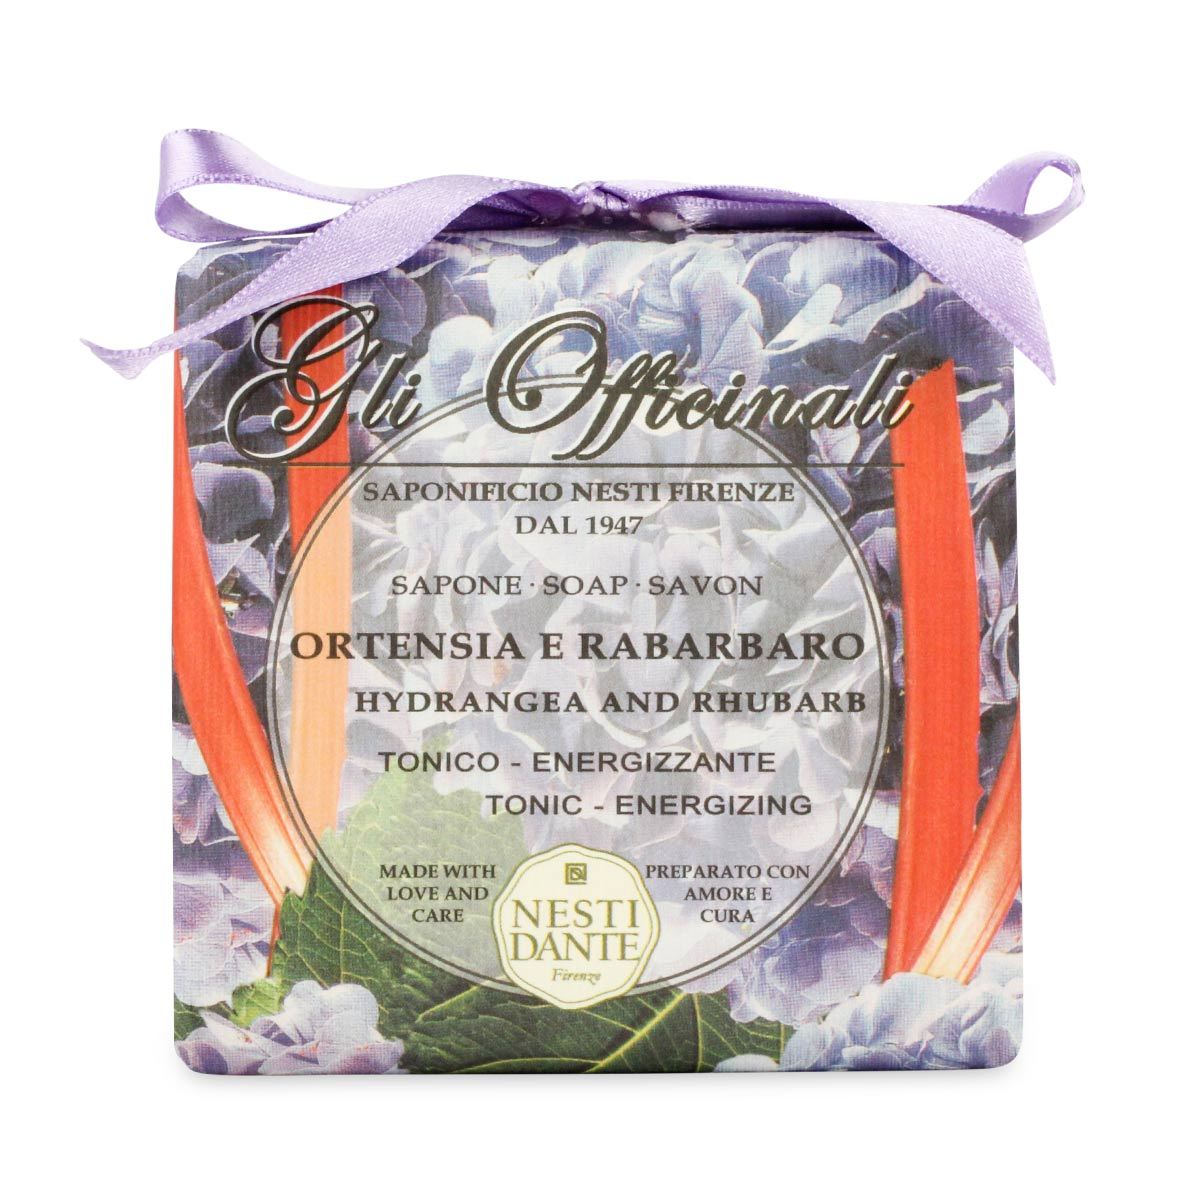 Primary image of Hydrangea & Rhubarb Soap